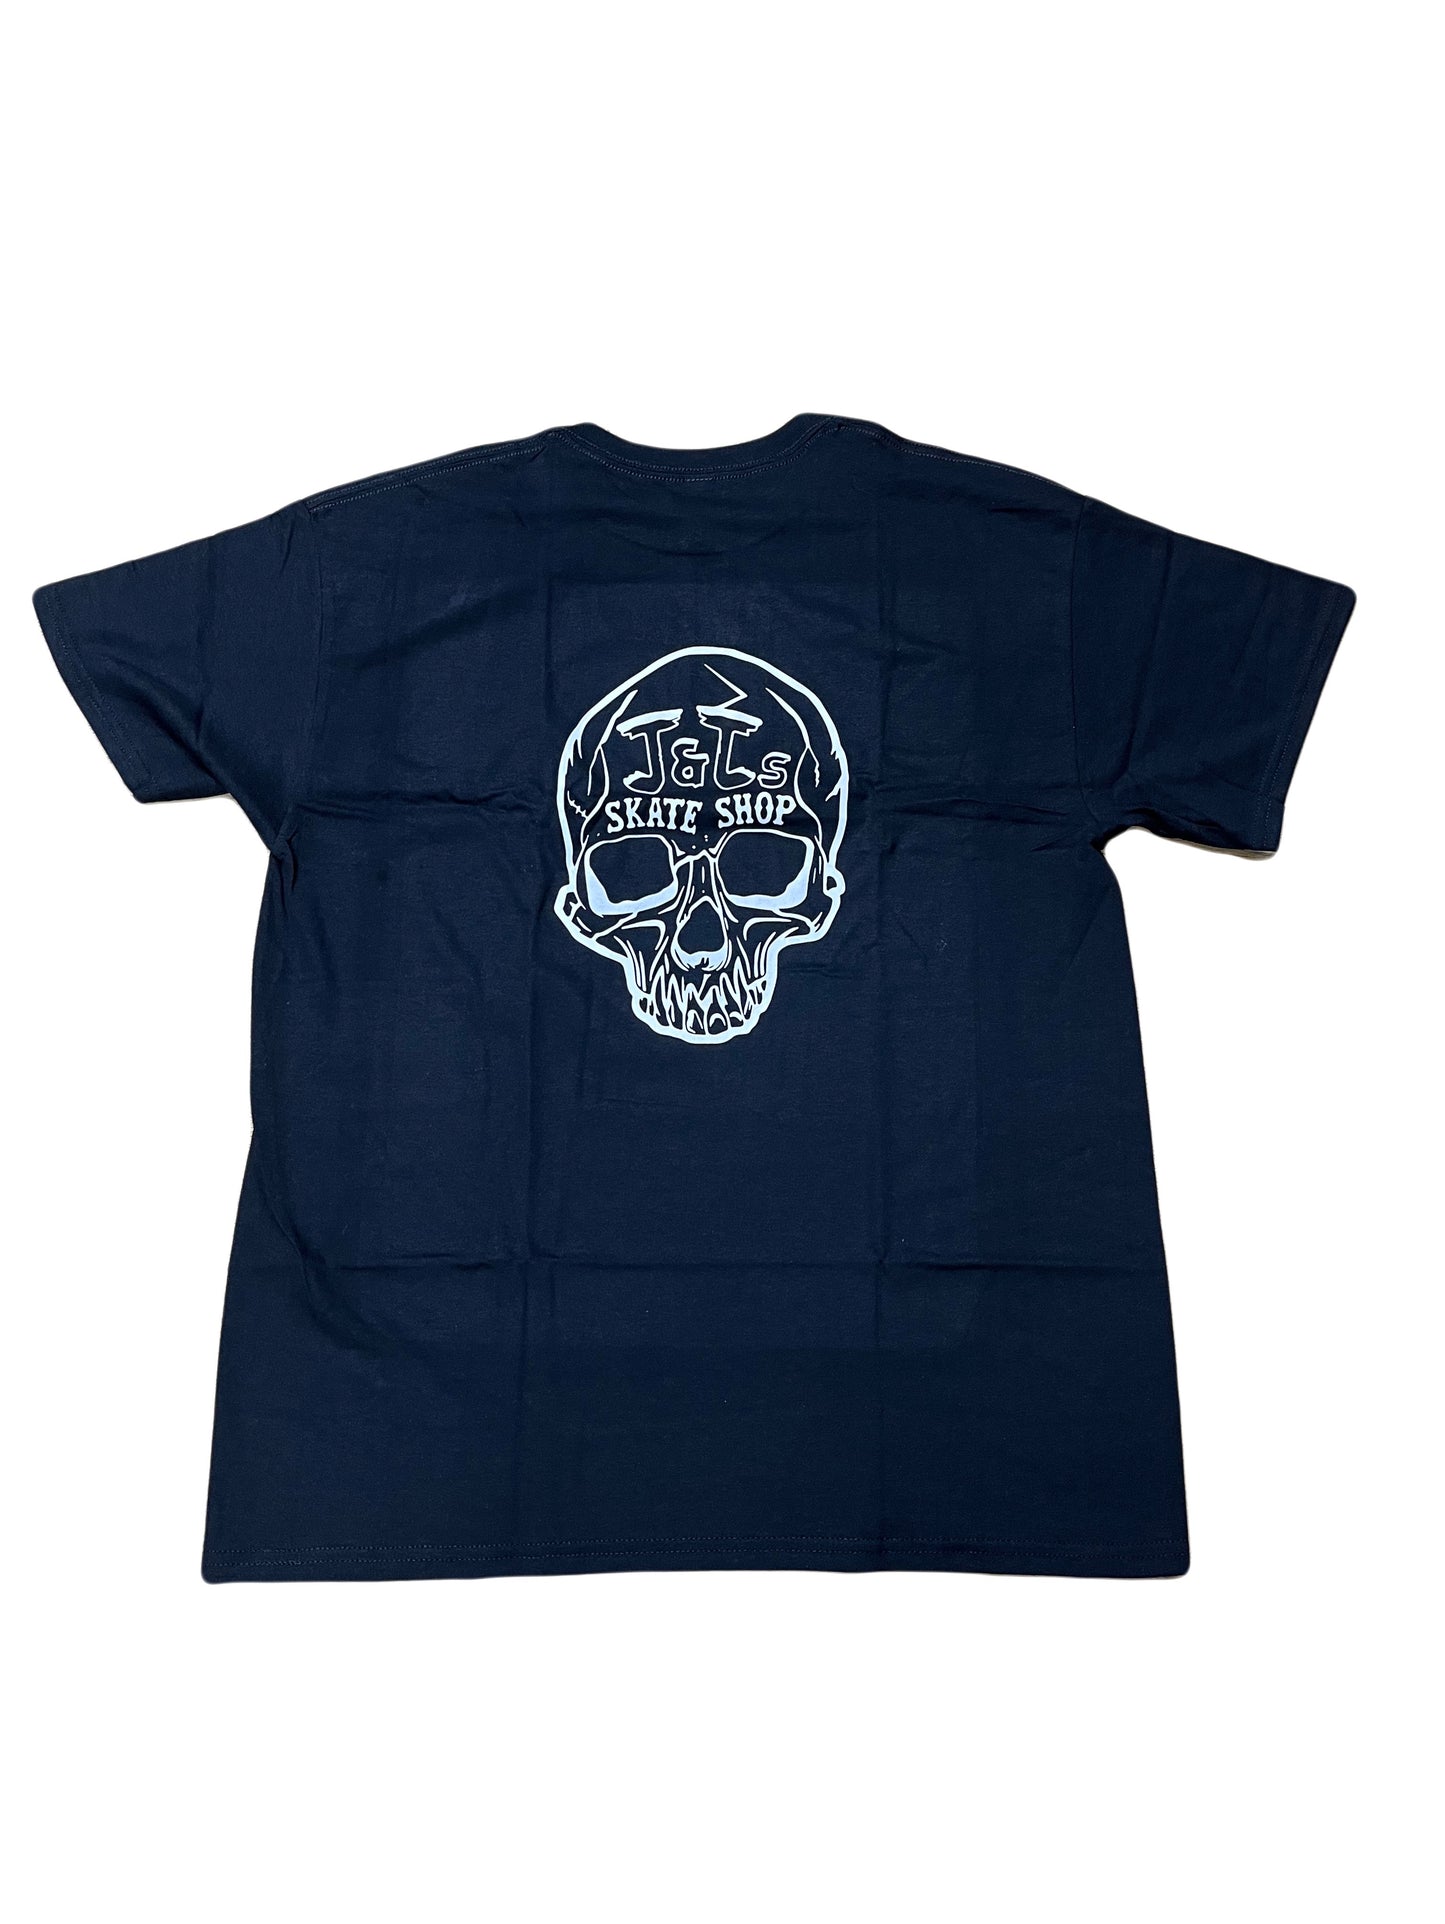 J and J's shop t-shirt Skull Black